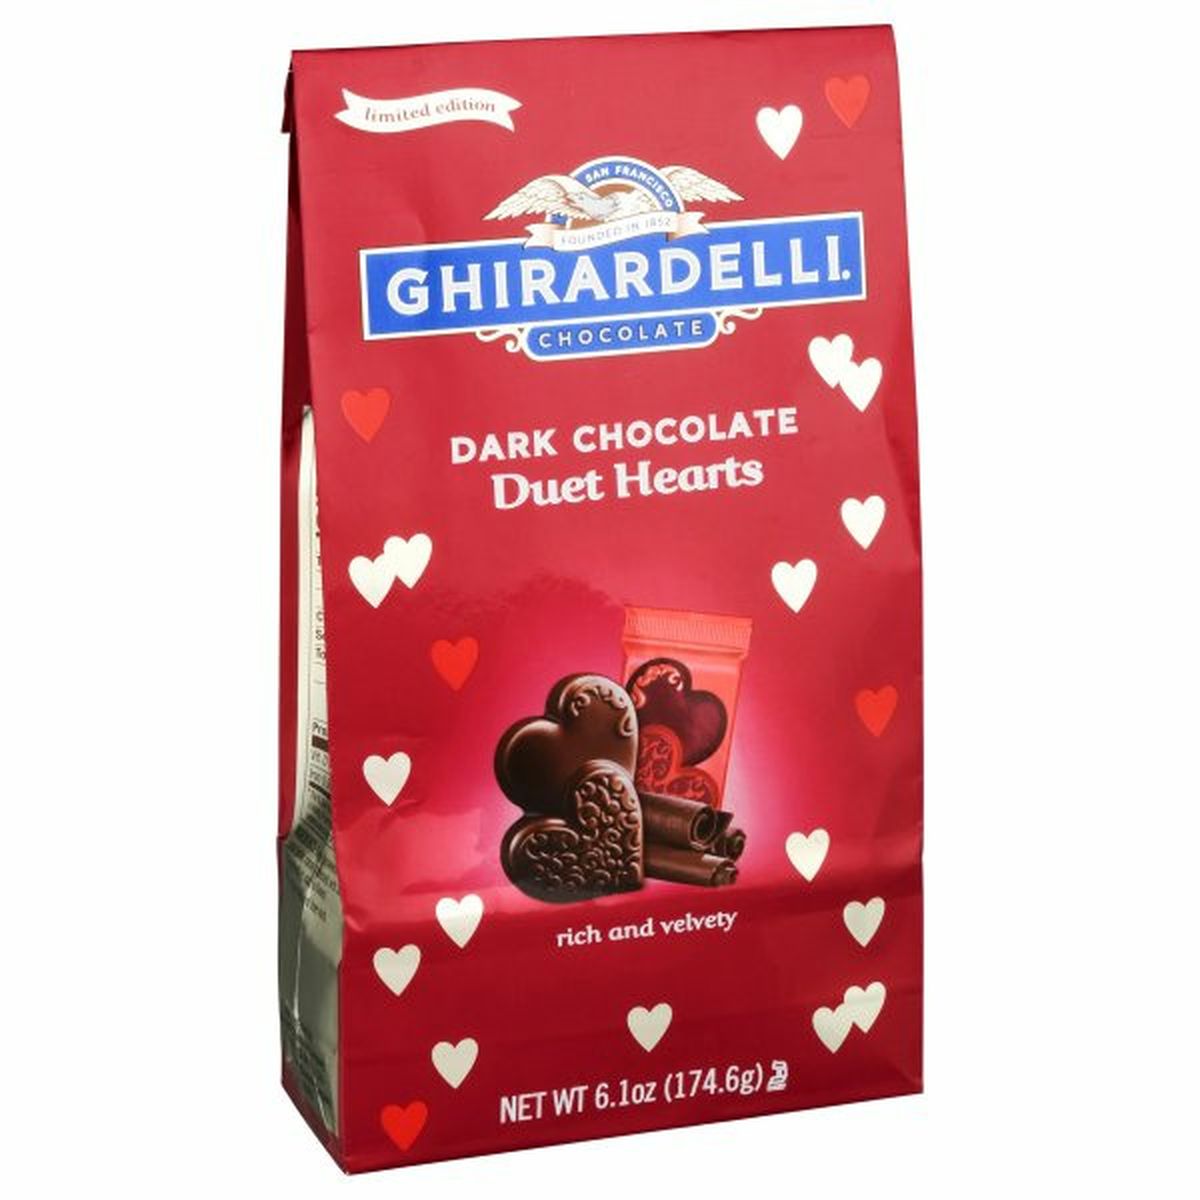 Calories in Ghirardelli Dark Chocolate, Duet Hearts